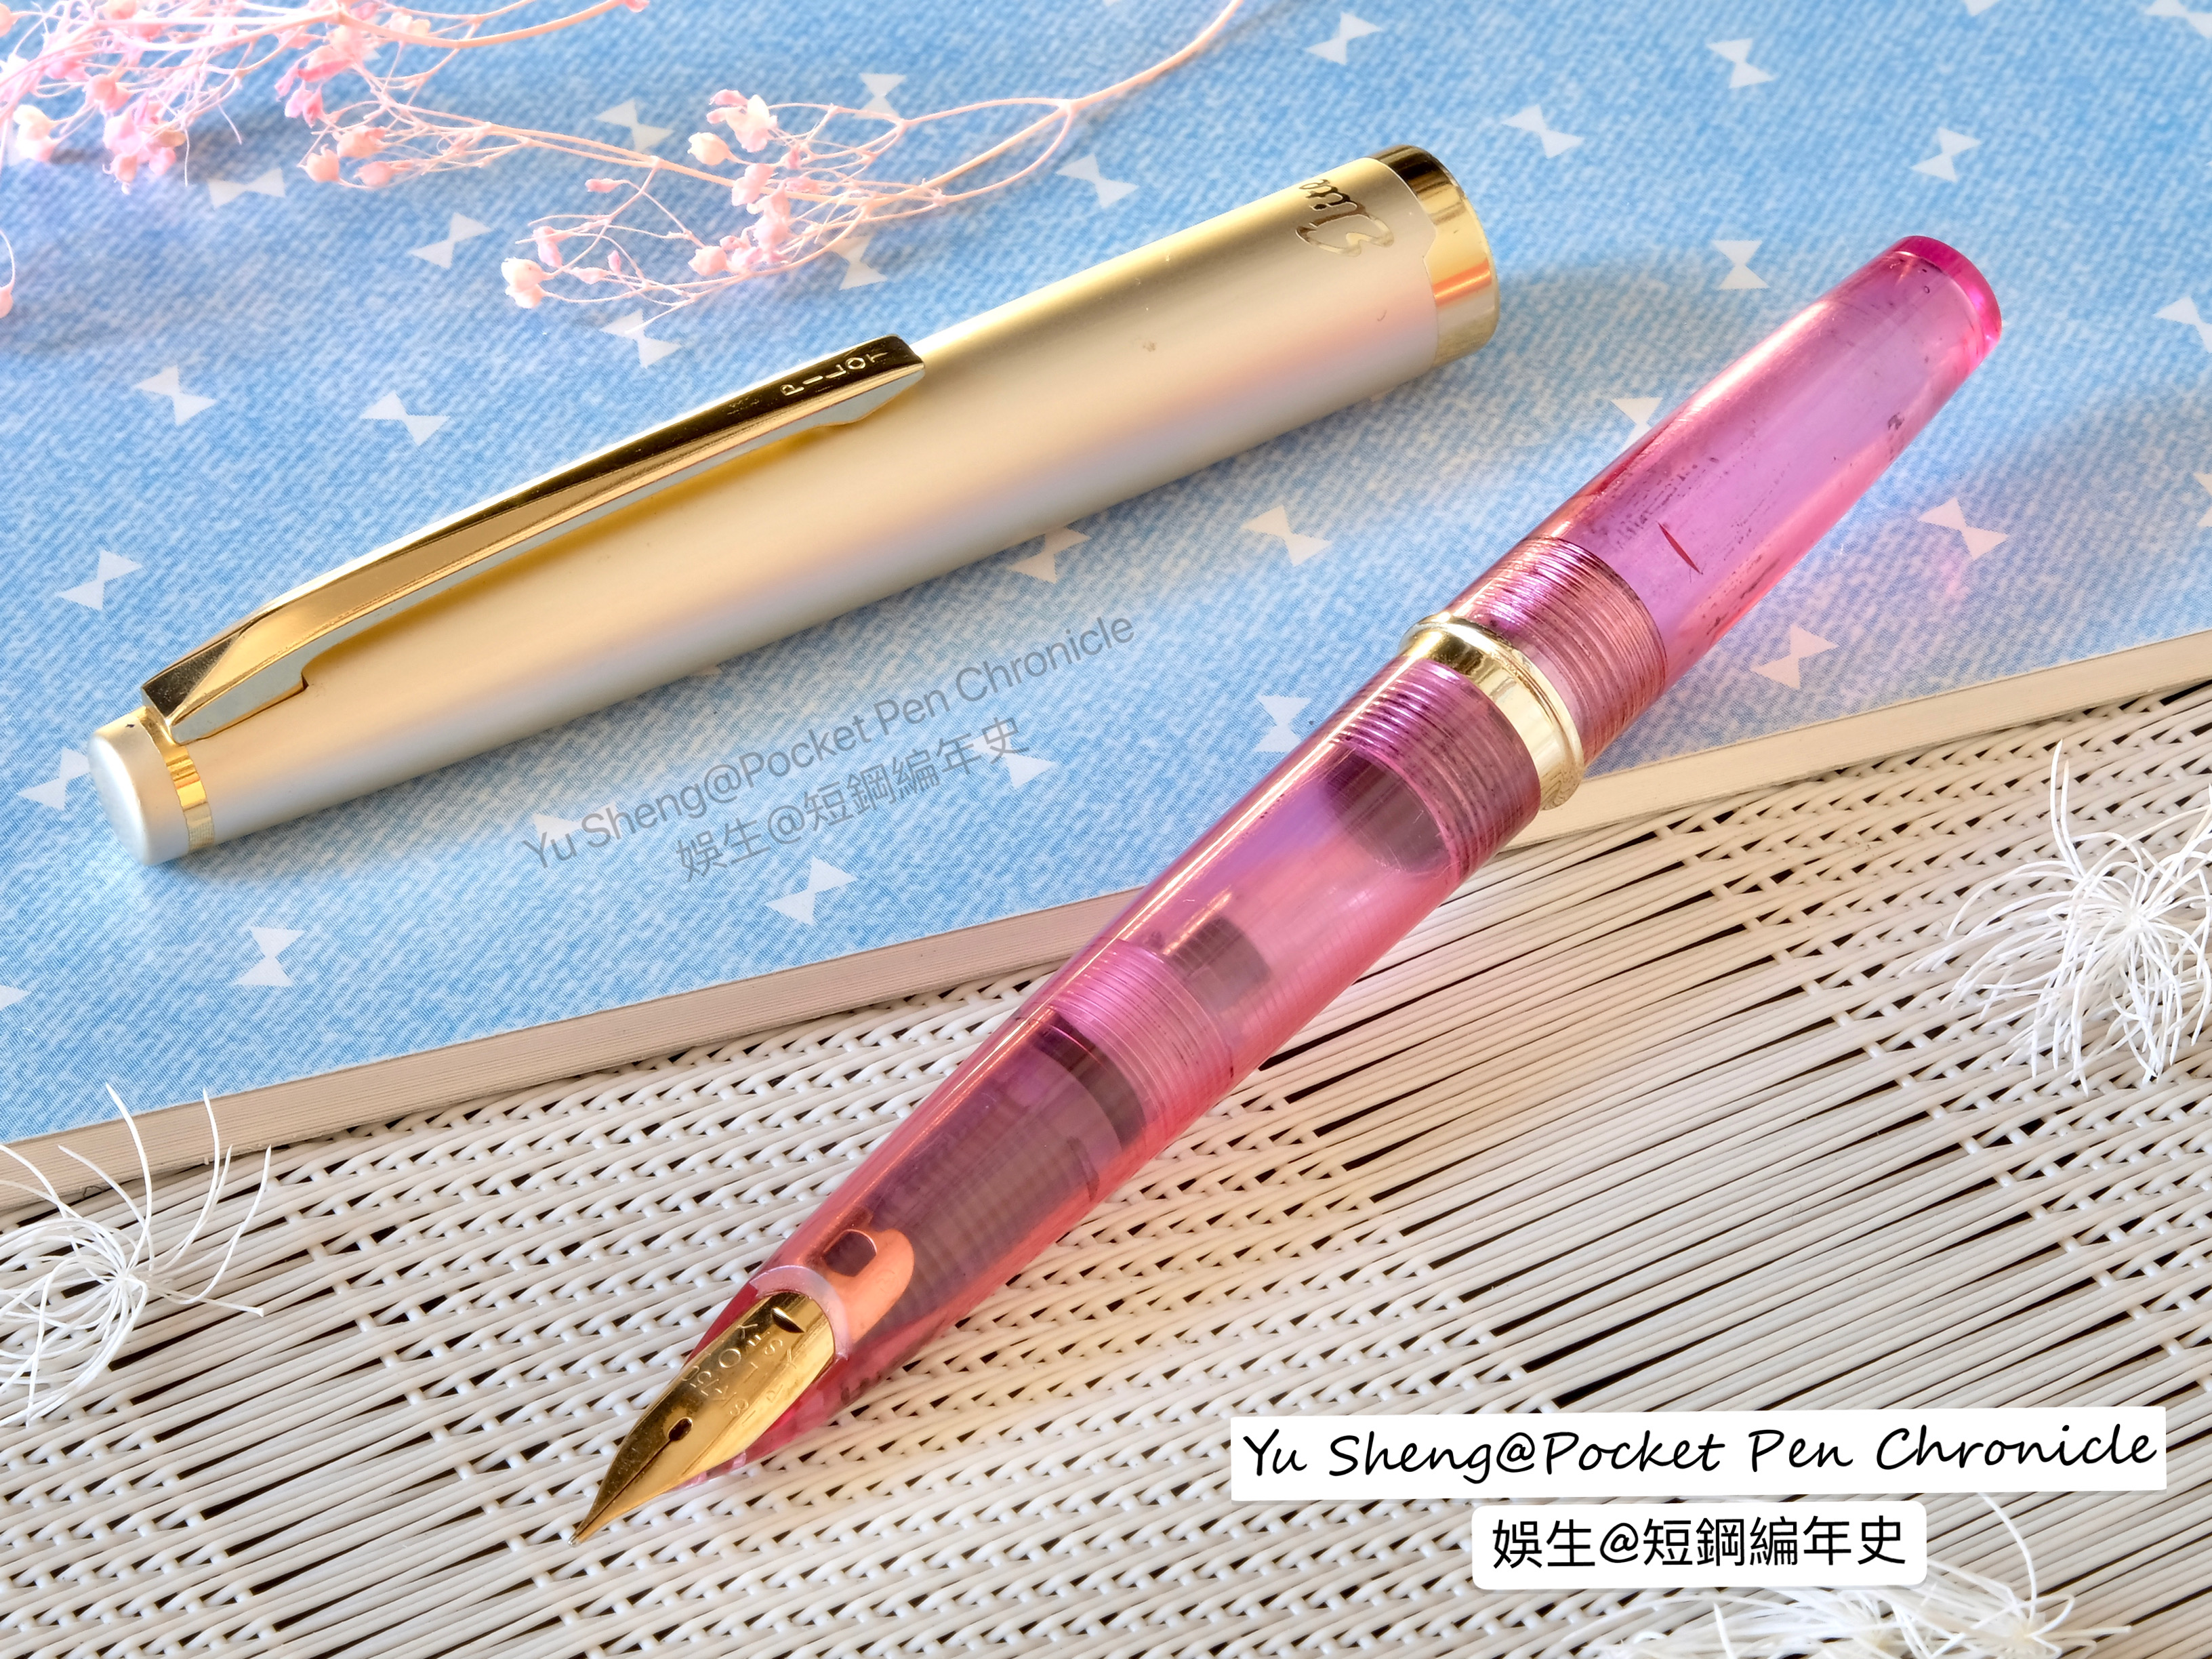 Pilot Elite S pocket pen, employee-specific version, translucent pink barrel, 18K-Gold SF nib